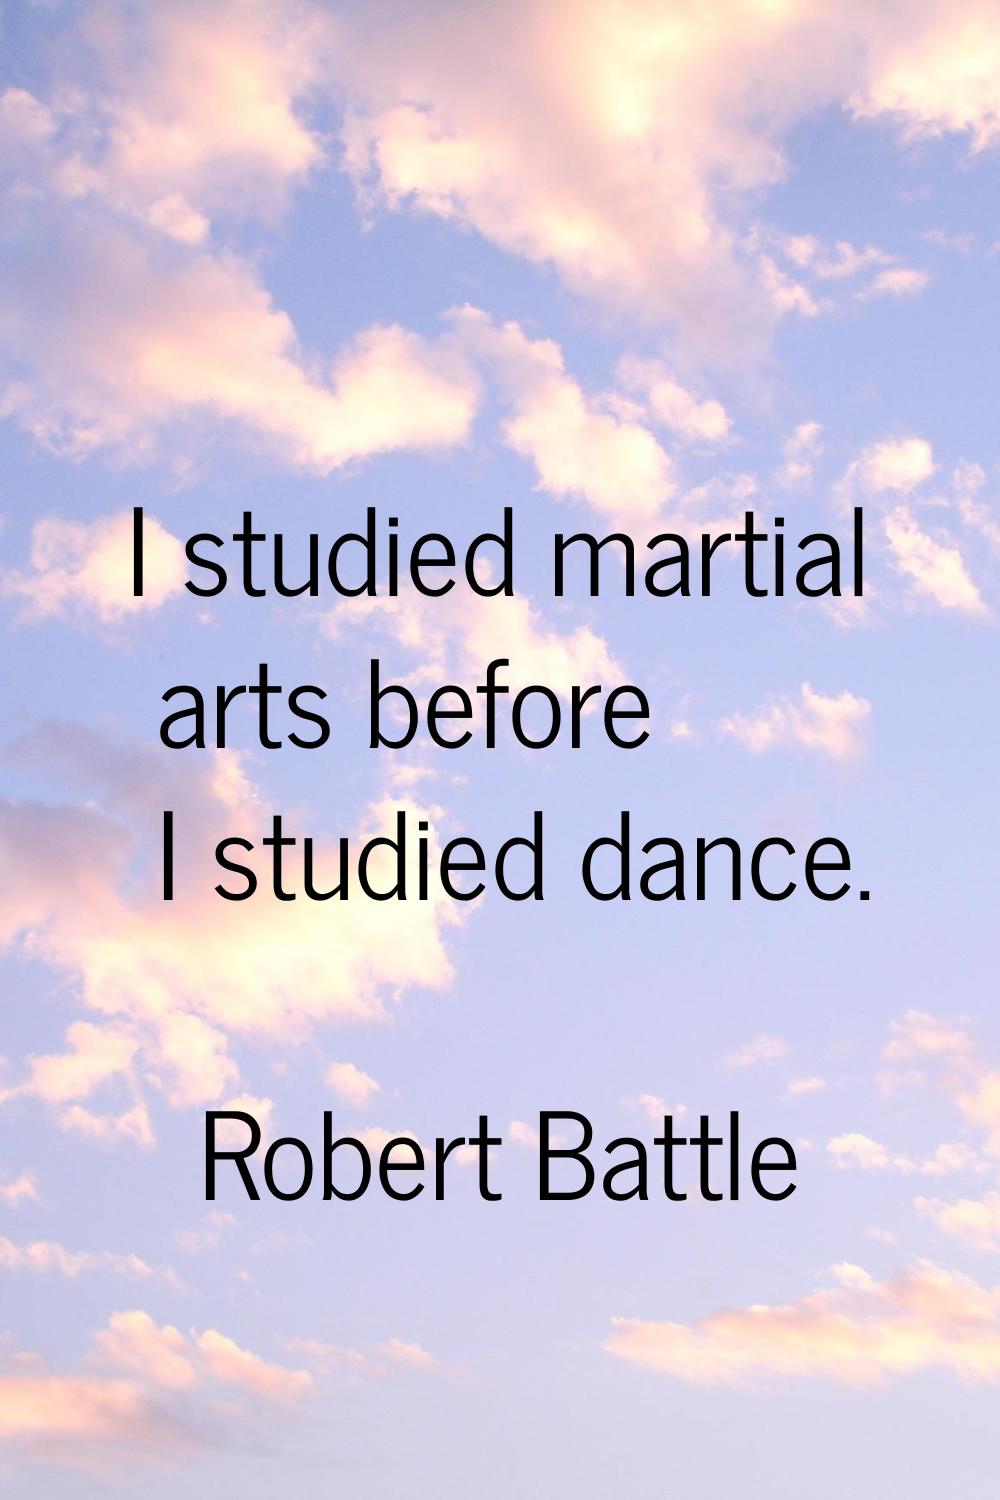 I studied martial arts before I studied dance.